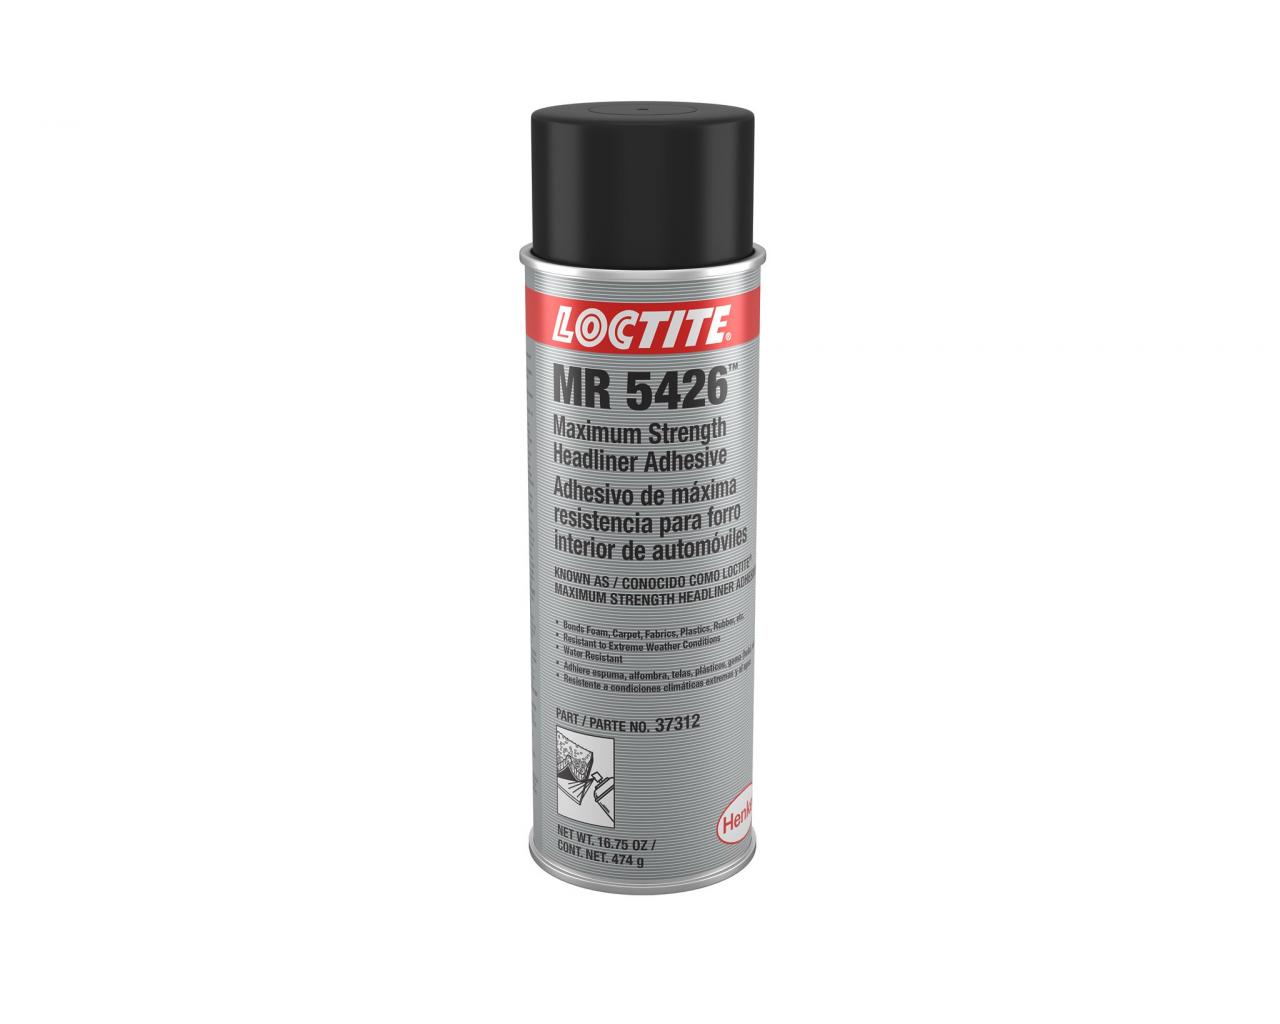 LOCTITE MR 5426 - Headliner spray adhesive - Henkel Adhesives